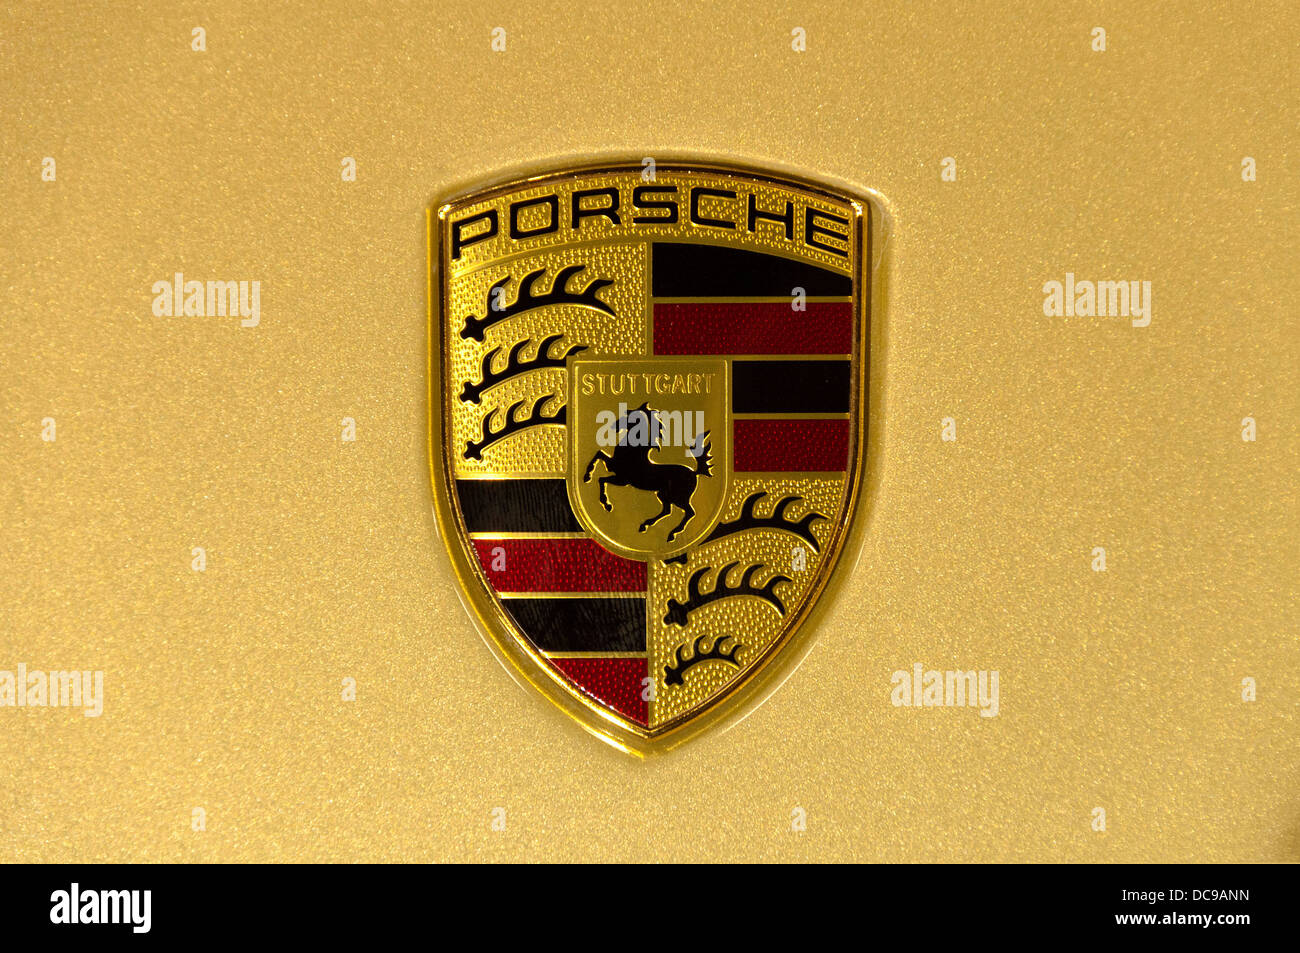 Porsche logo a car hi-res stock photography and images - Alamy